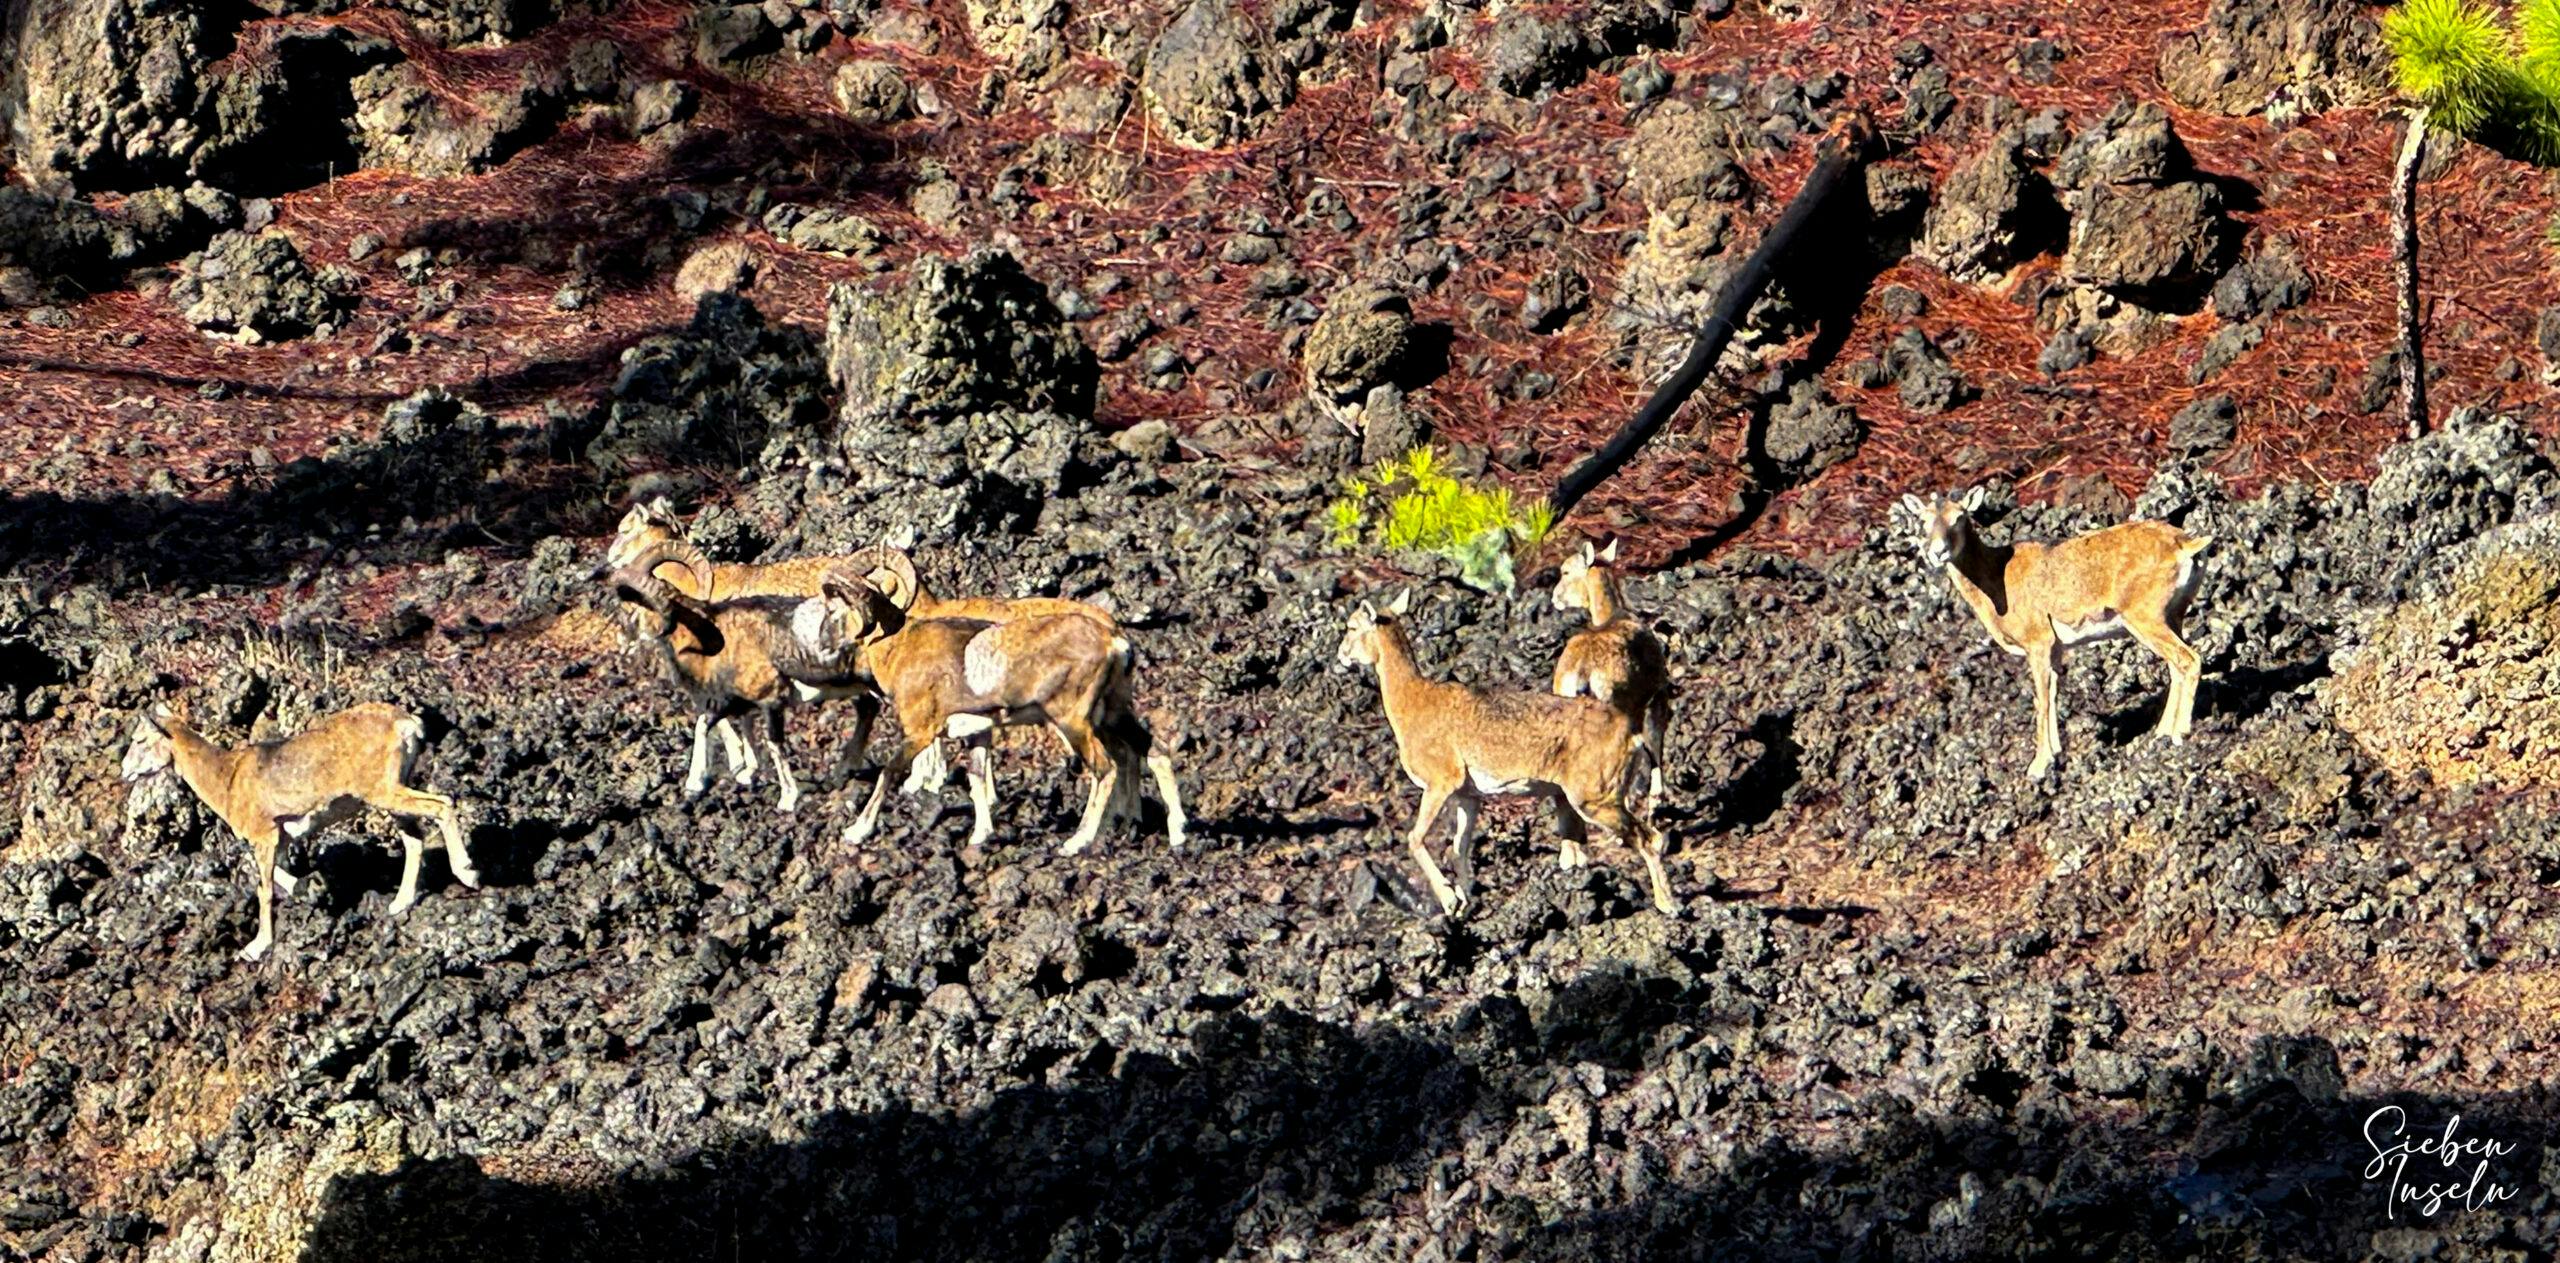 The last mouflons of Tenerife